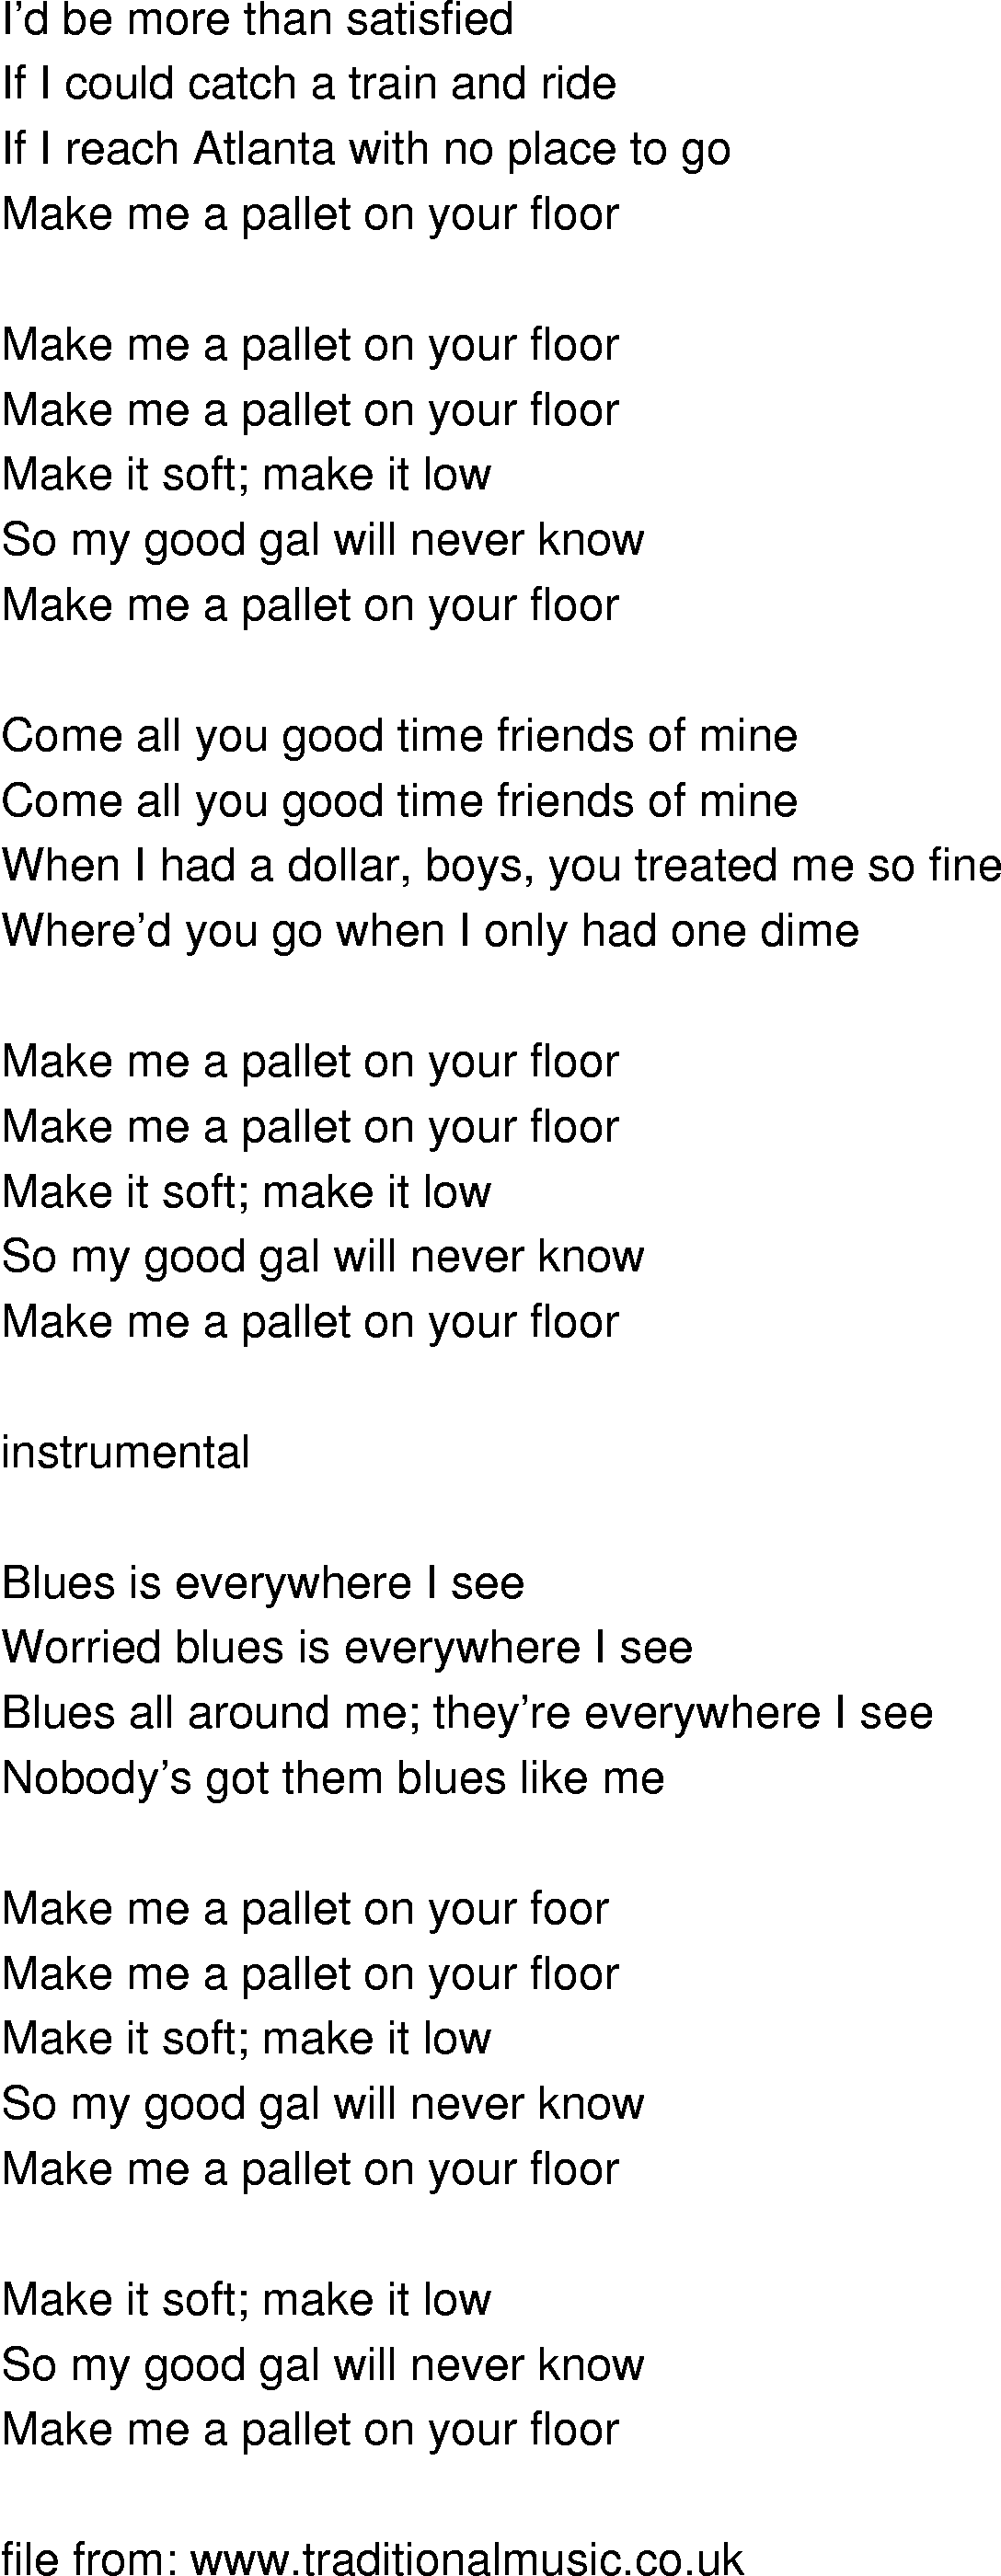 Old-Time (oldtimey) Song Lyrics - make me a pallet on your floor